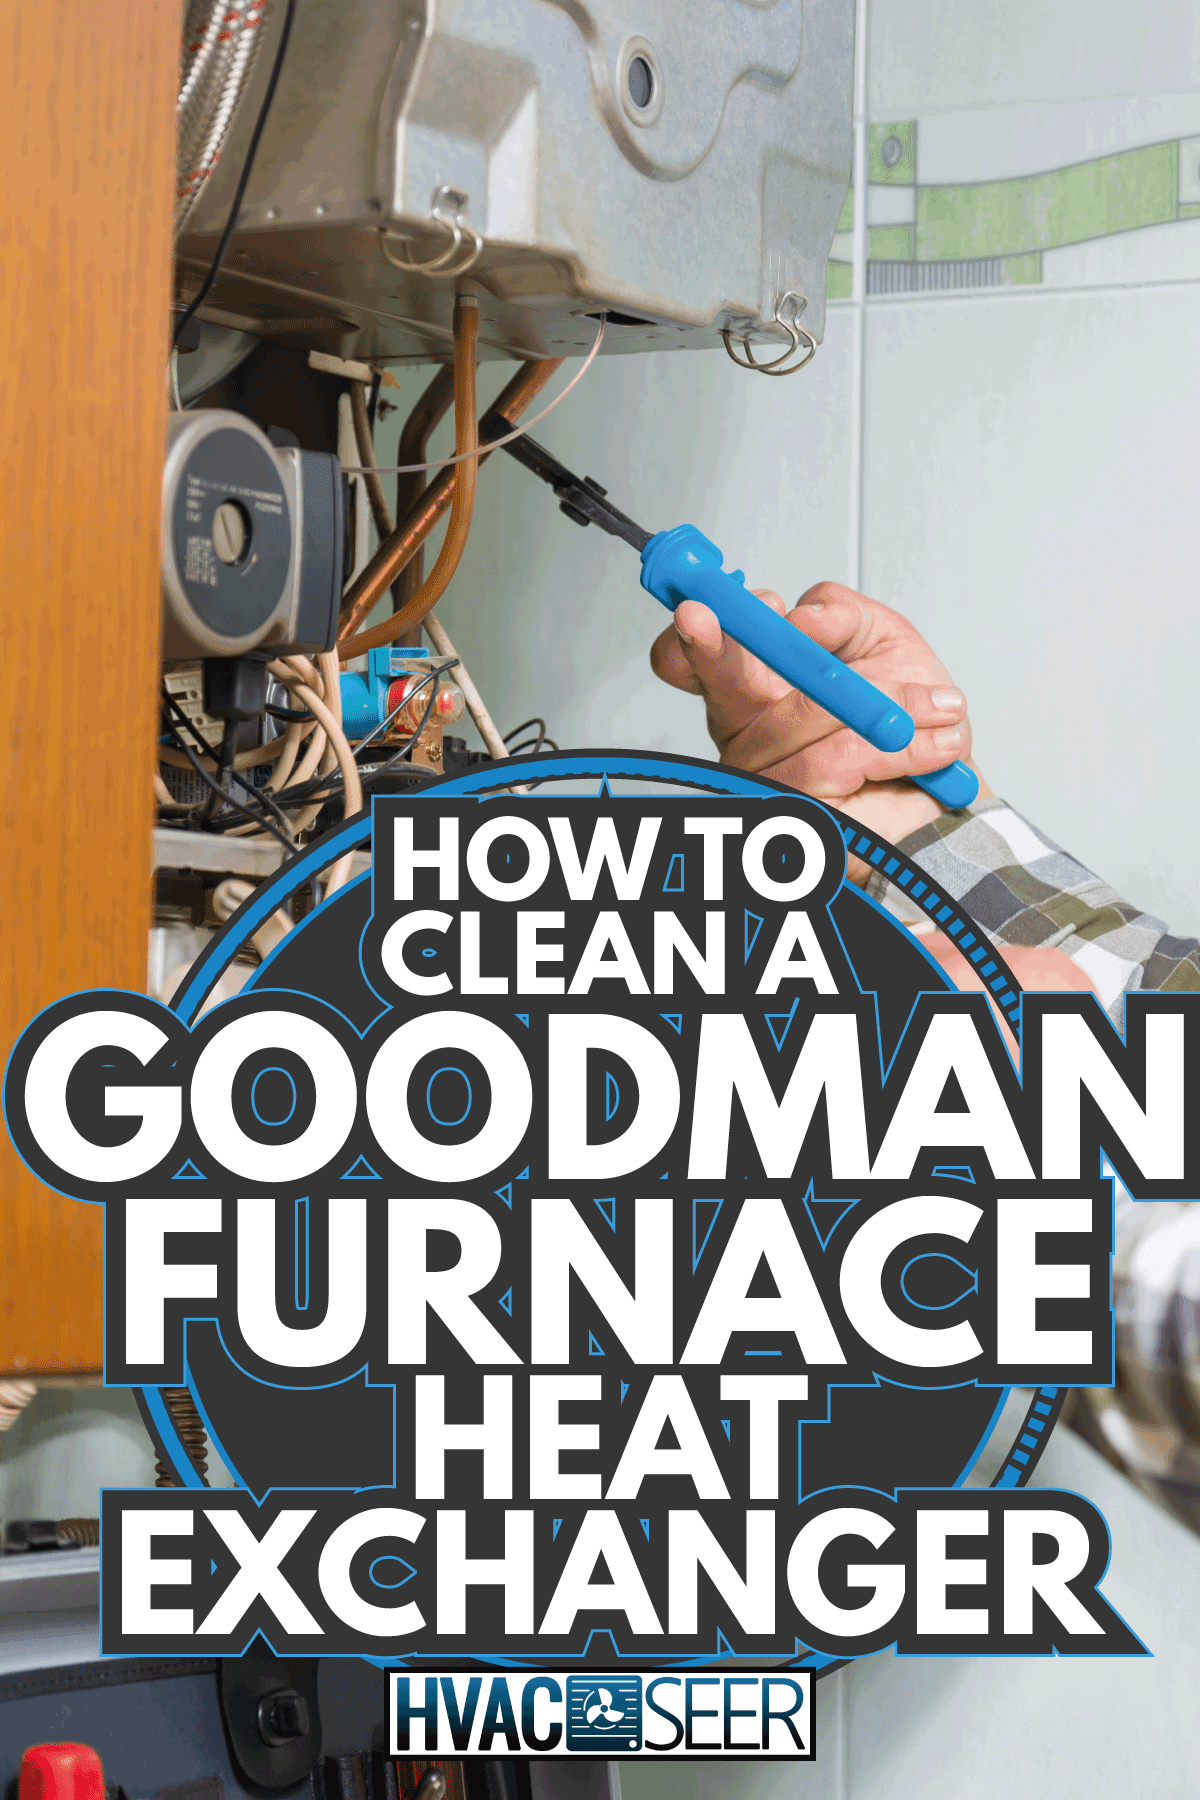 Technician repairing Gas Furnace using blue pliers. How To Clean A Goodman Furnace Heat Exchanger